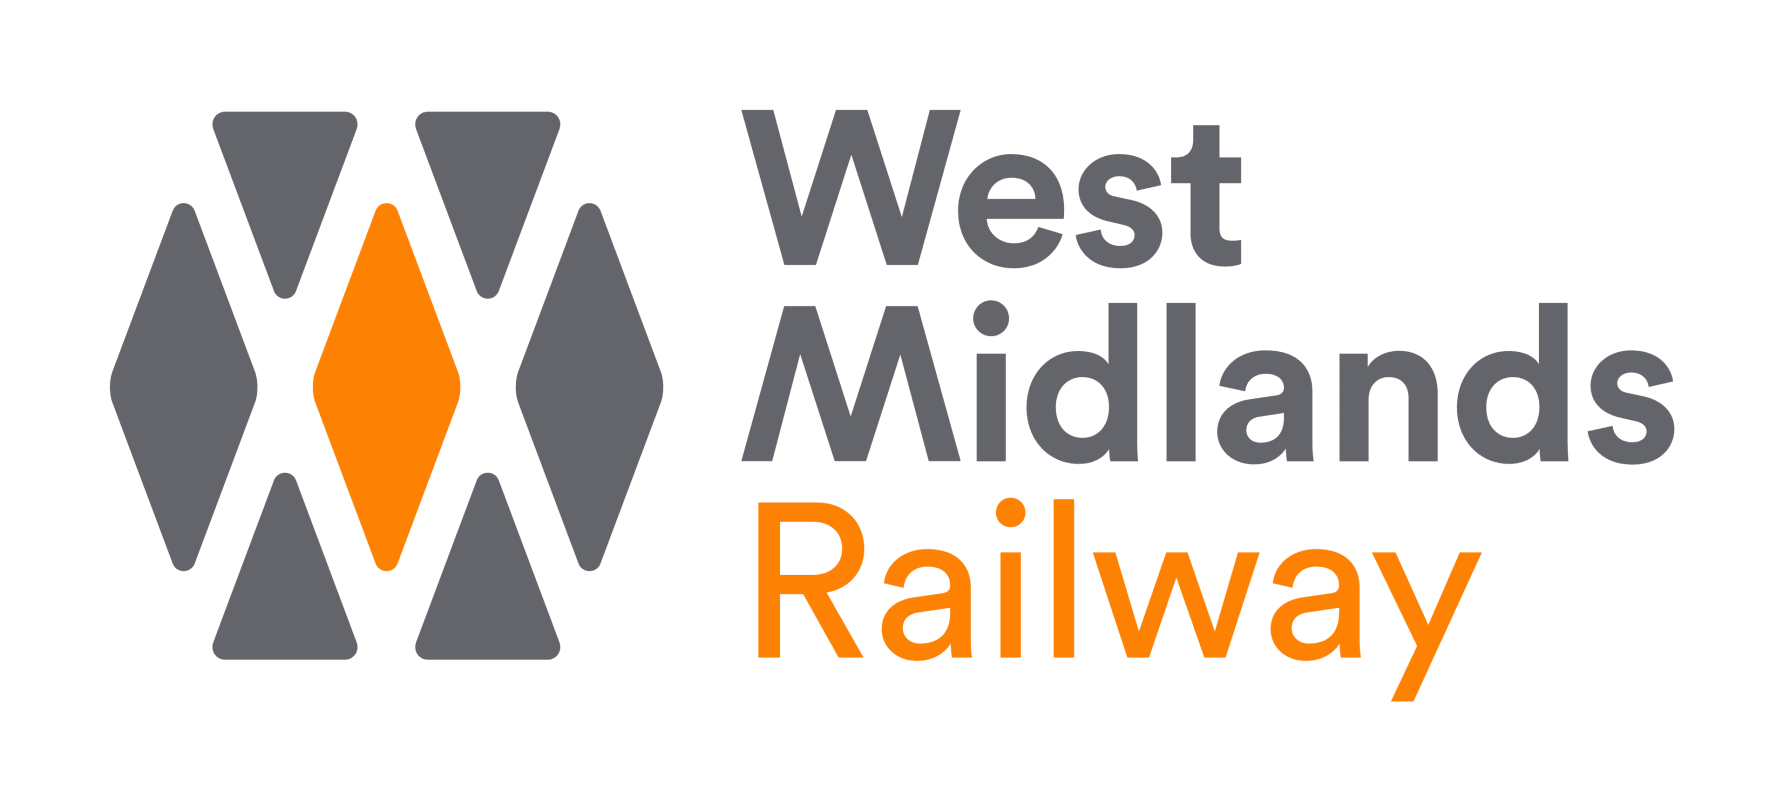 West Midlands Railway invites customers to help improve services